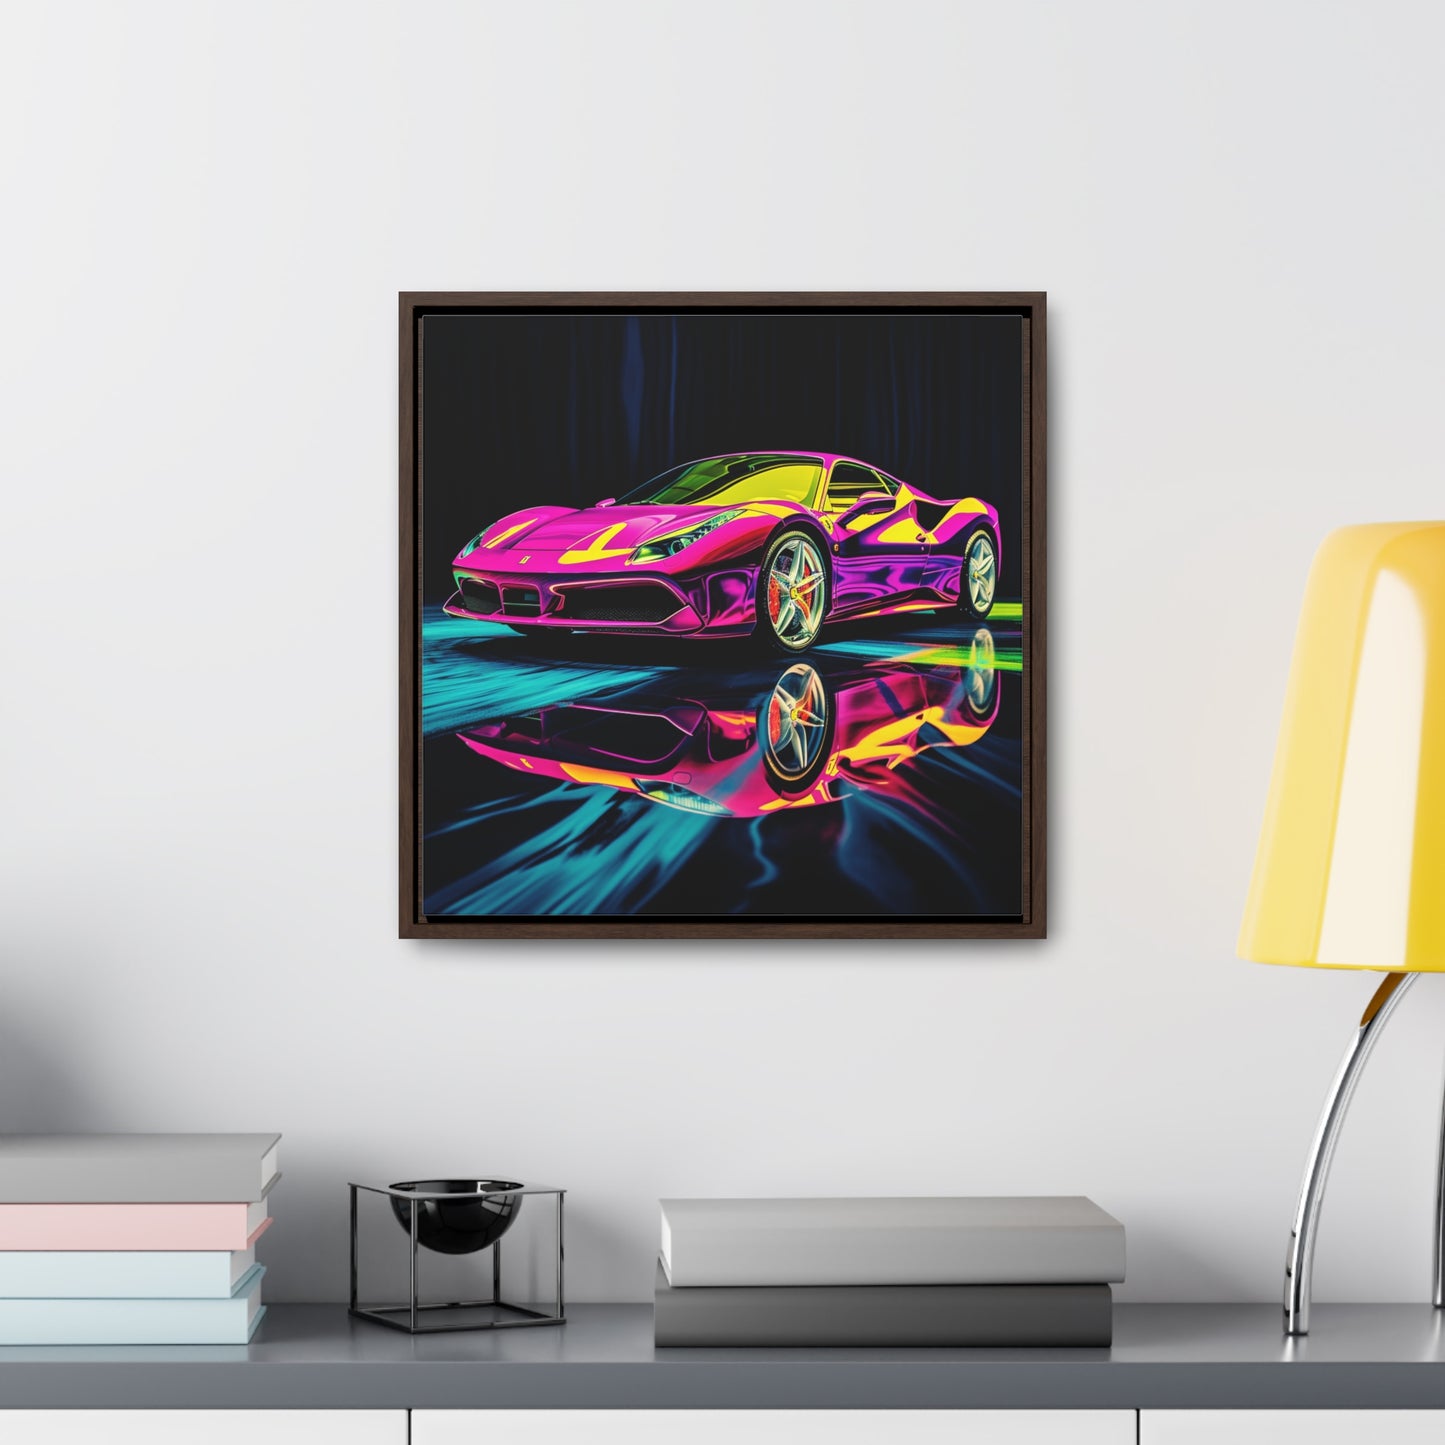 Gallery Canvas Wraps, Square Frame Pink Ferrari Macro 3